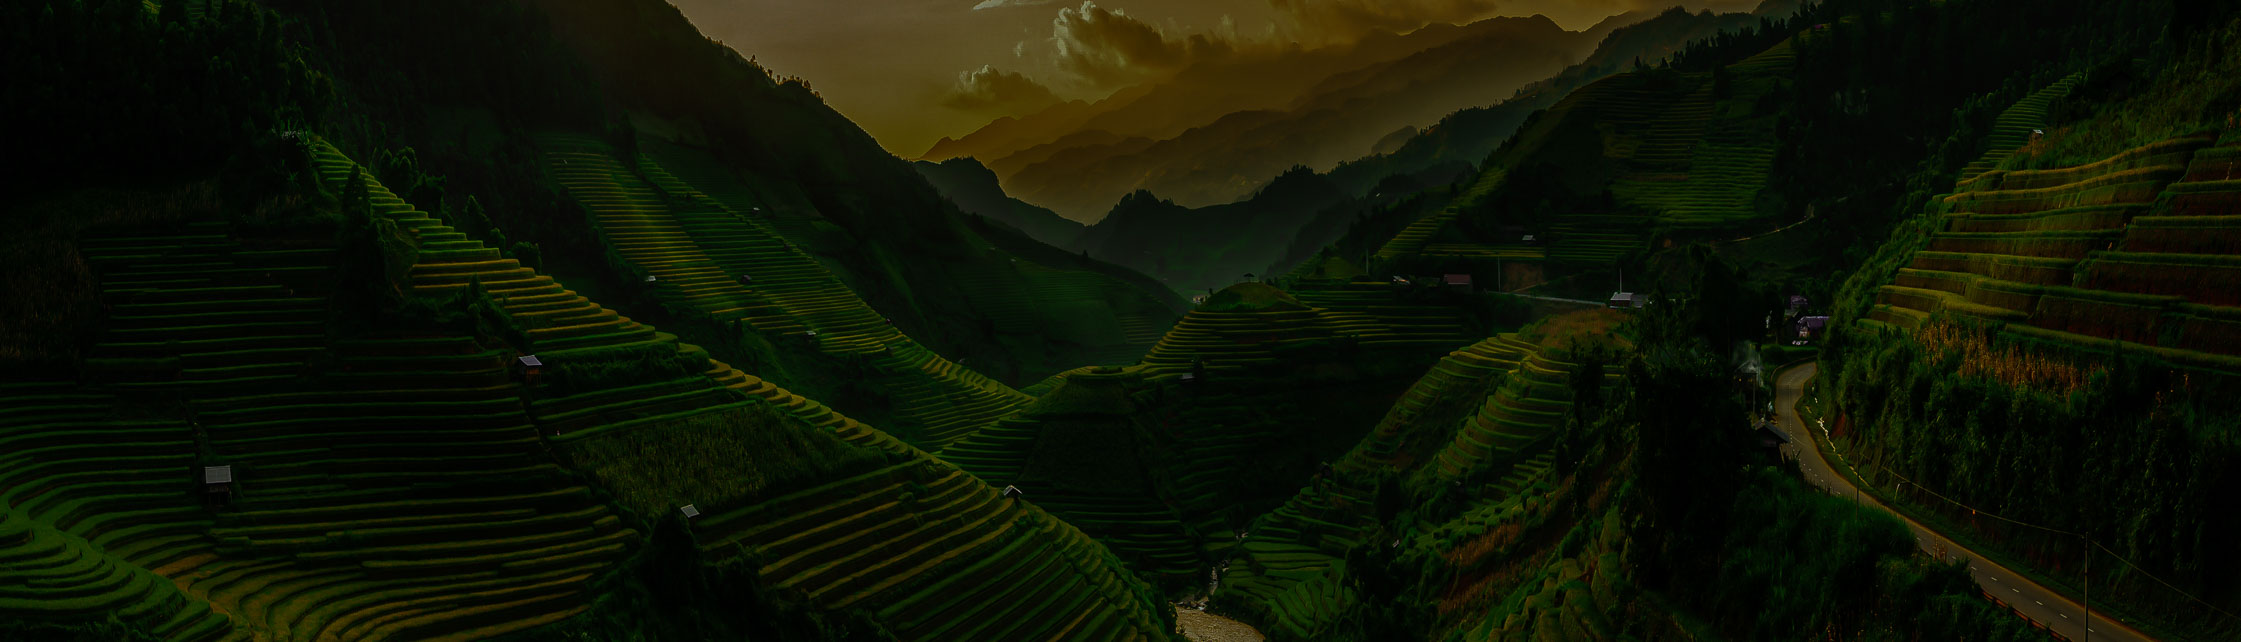 Grüne Reisfelder in den Bergen Asiens